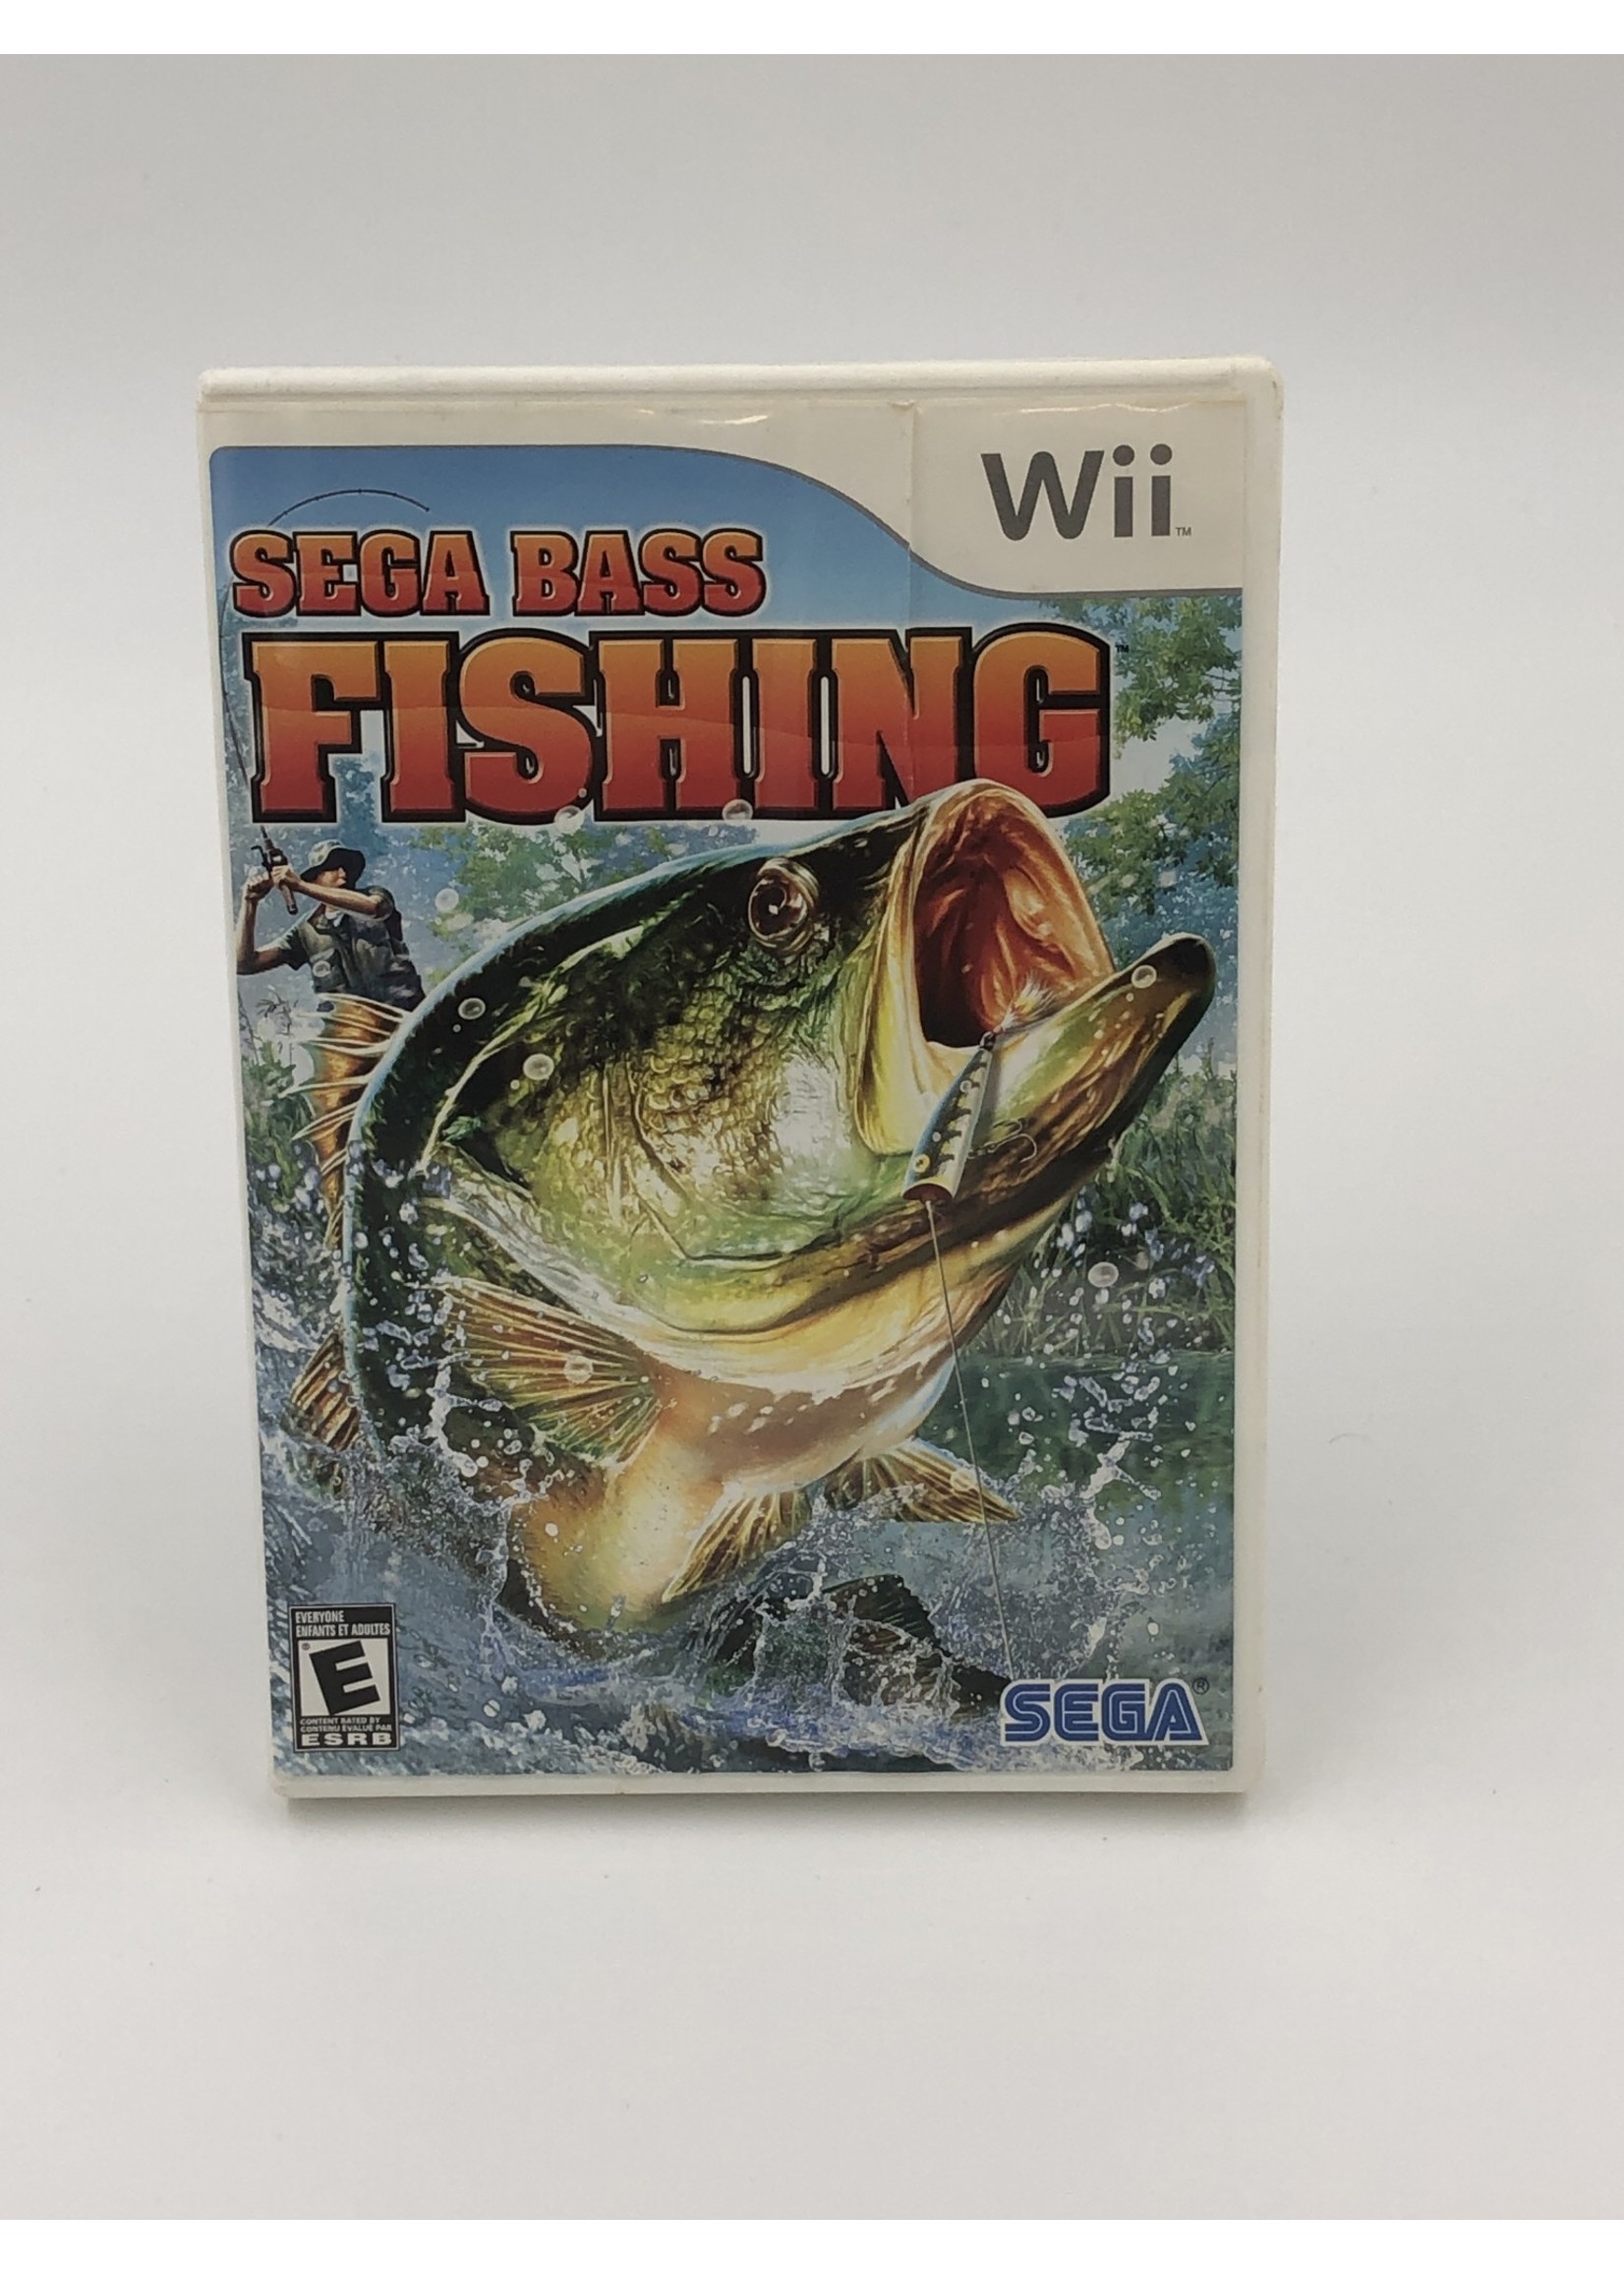 Sega Bass Fishing - Wii - This N That